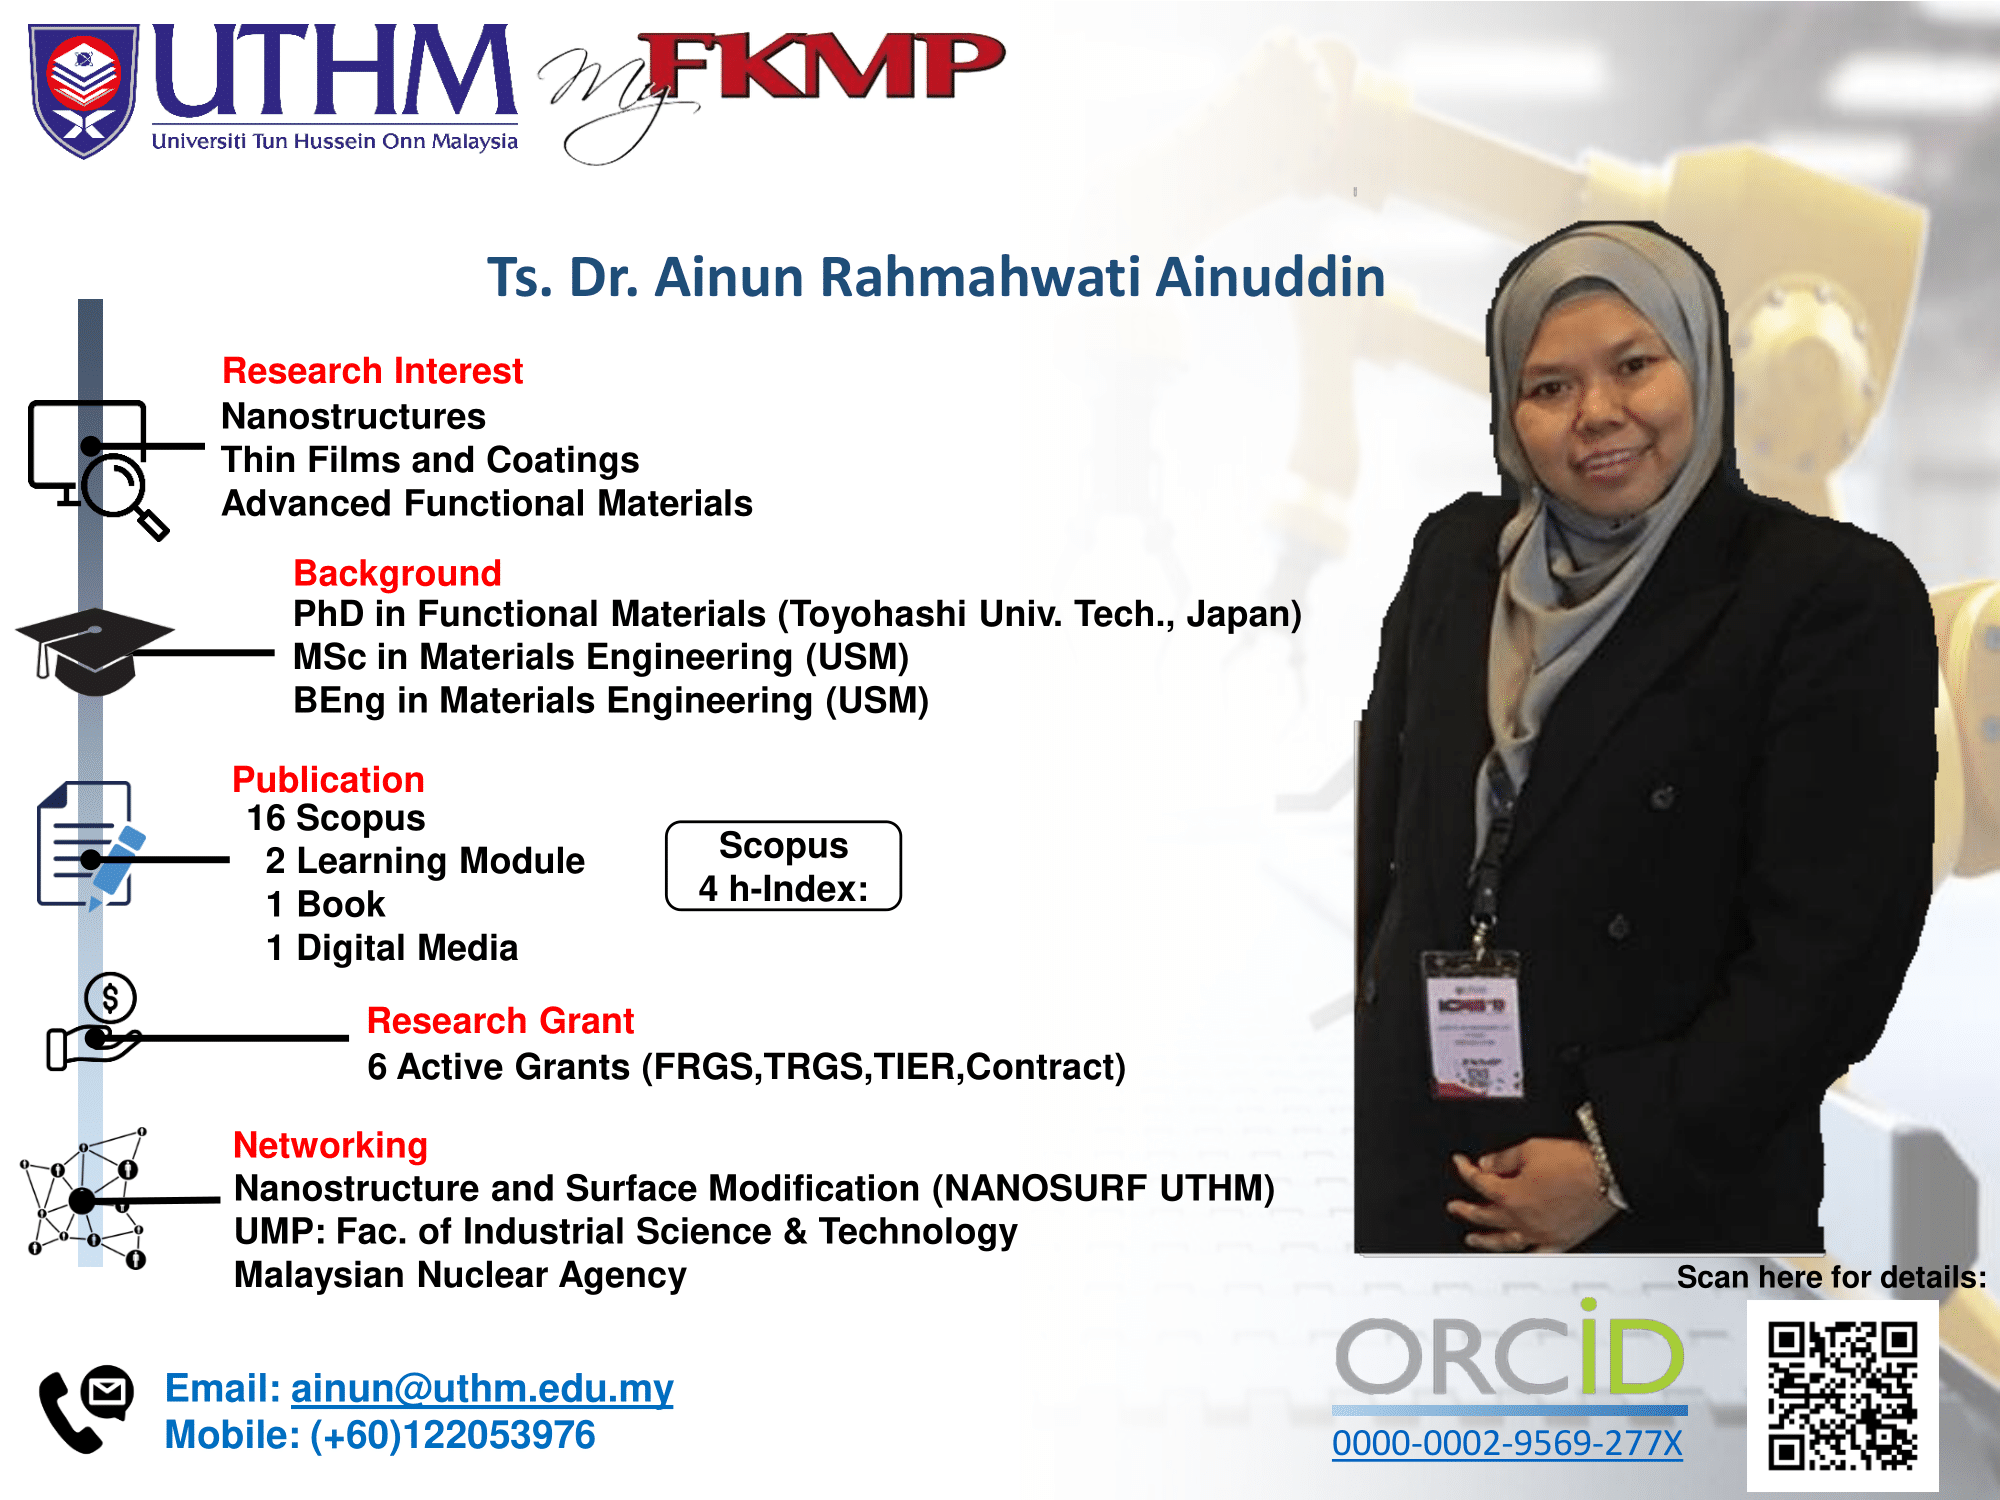 Ts. Dr. Ainun Rahmahwati Ainuddin